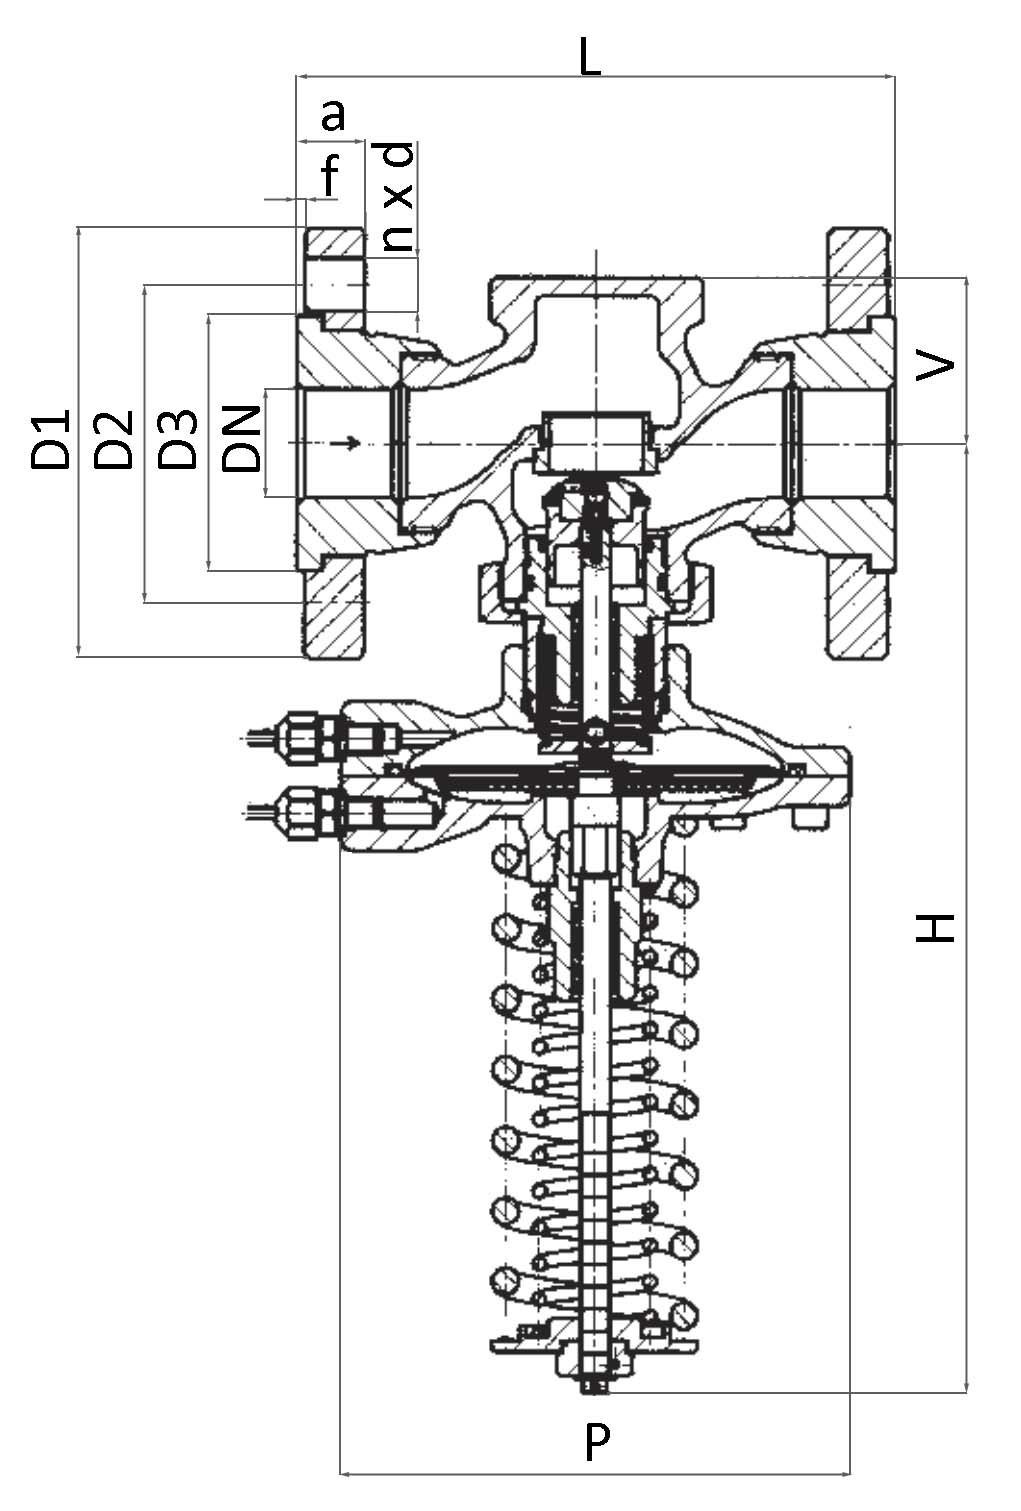 Регулятор перепада давления LDM RD122D Ду15 Ру25 Kvs1 прямого действия, корпус - чугун, фланцевый, Tmax до 150°С, диапазон настройки 24 (60-400 кПа)